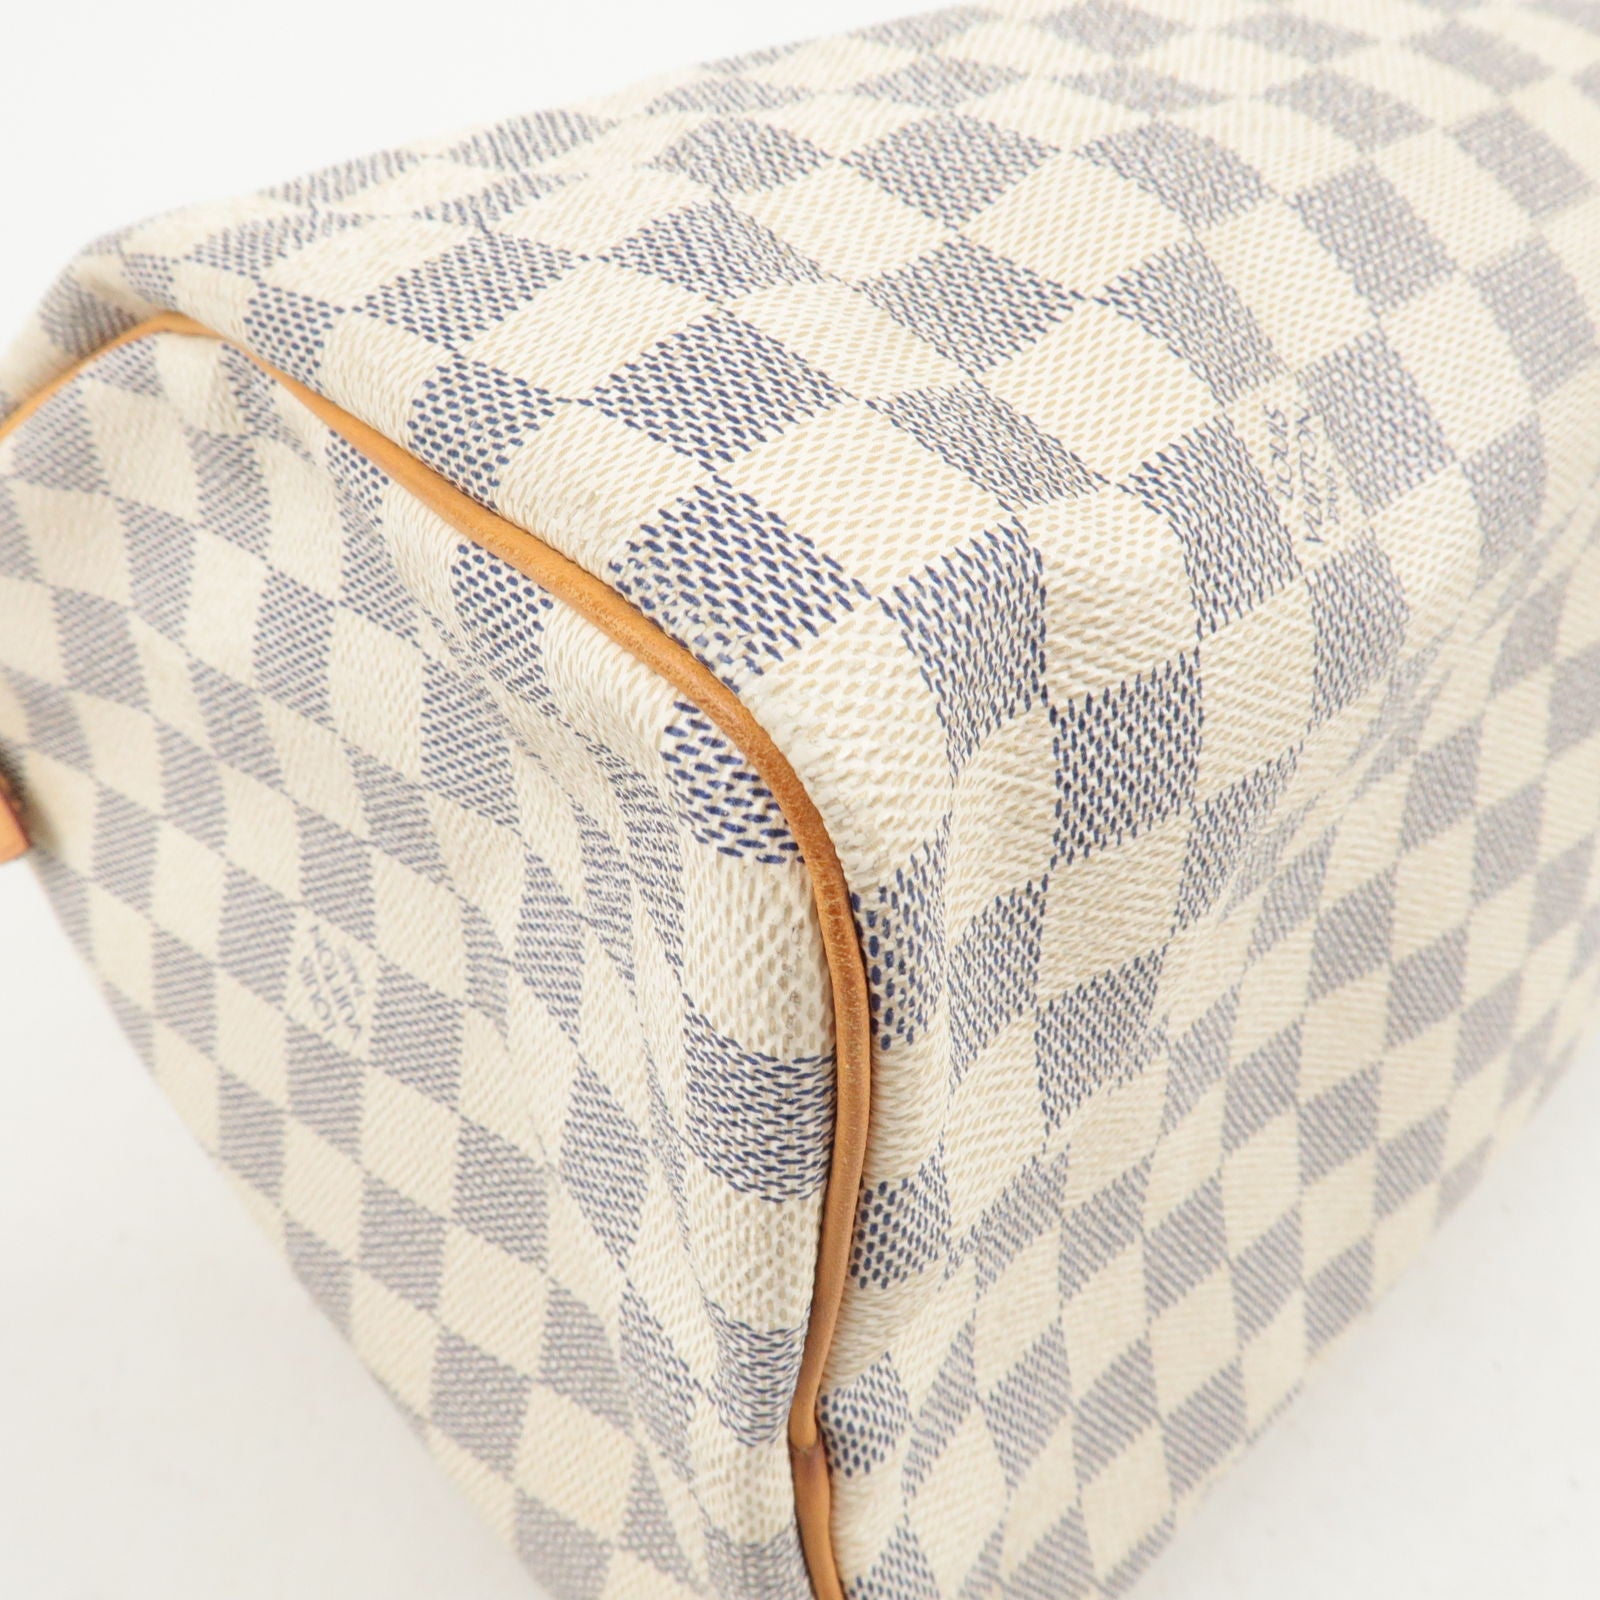 Boston - Louis Vuitton Trotteur shoulder bag in monogram canvas and natural  leather - Vuitton - Hand - Damier - ep_vintage luxury Store - Speedy - Azur  - 30 - Bag - Louis - N41533 – dct